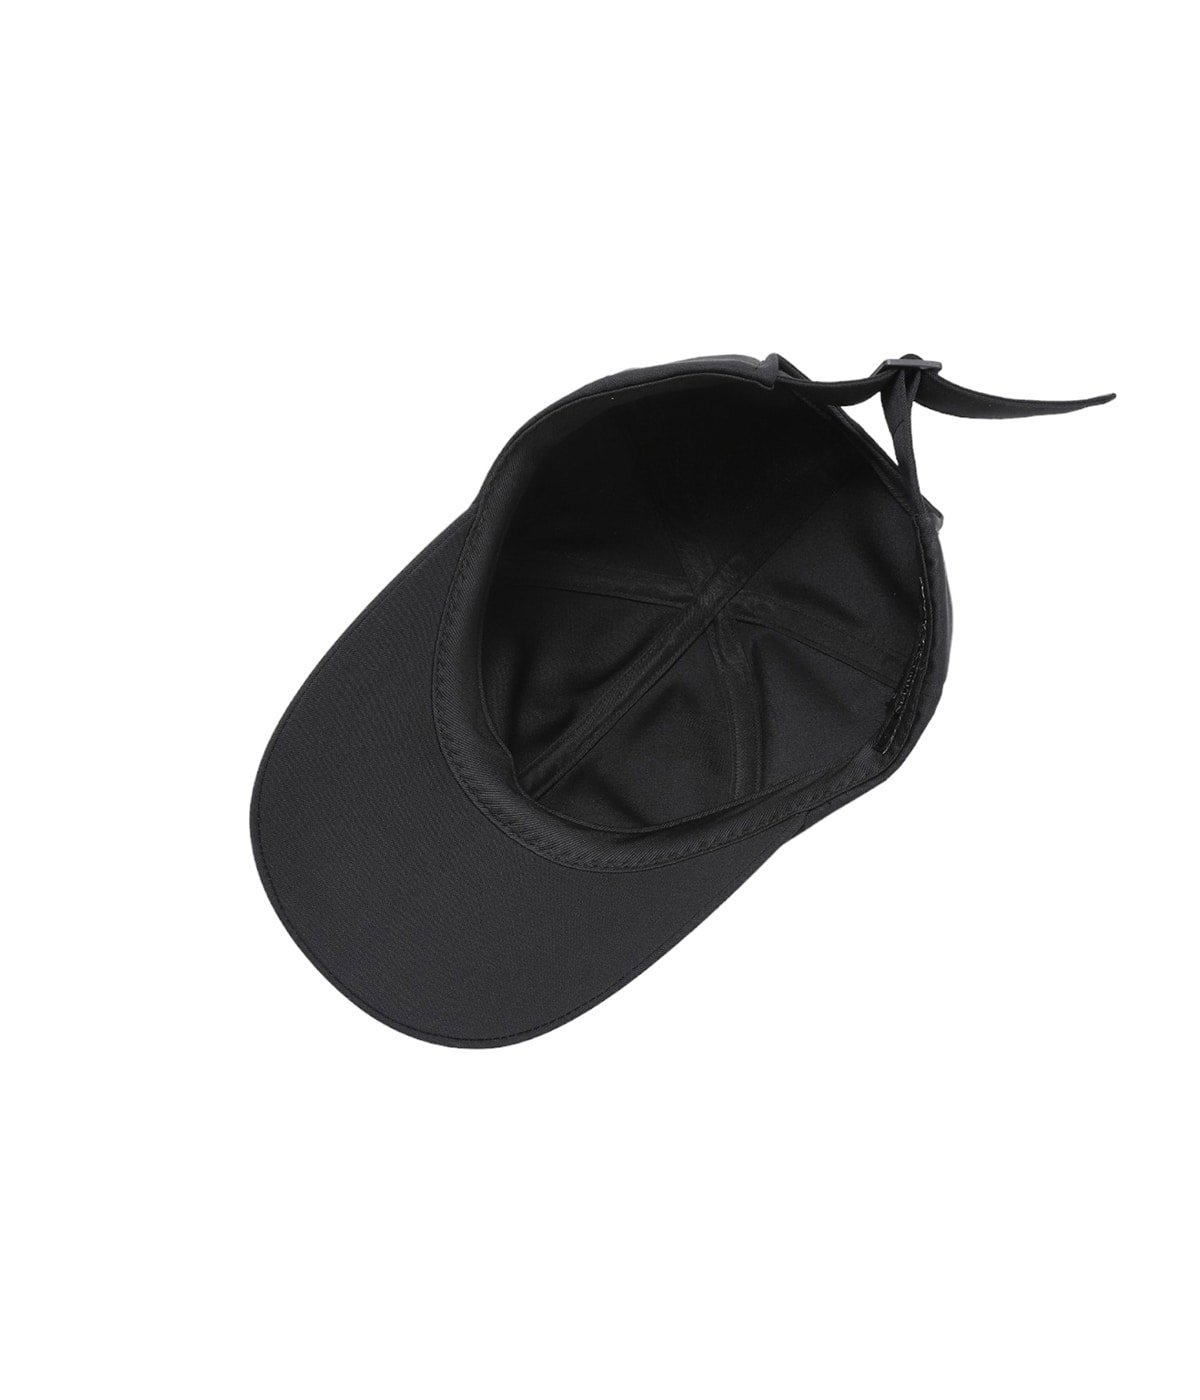 Dan cap | ENTWURFEIN HOMME(エントワフェインオム) / 帽子 キャップ 